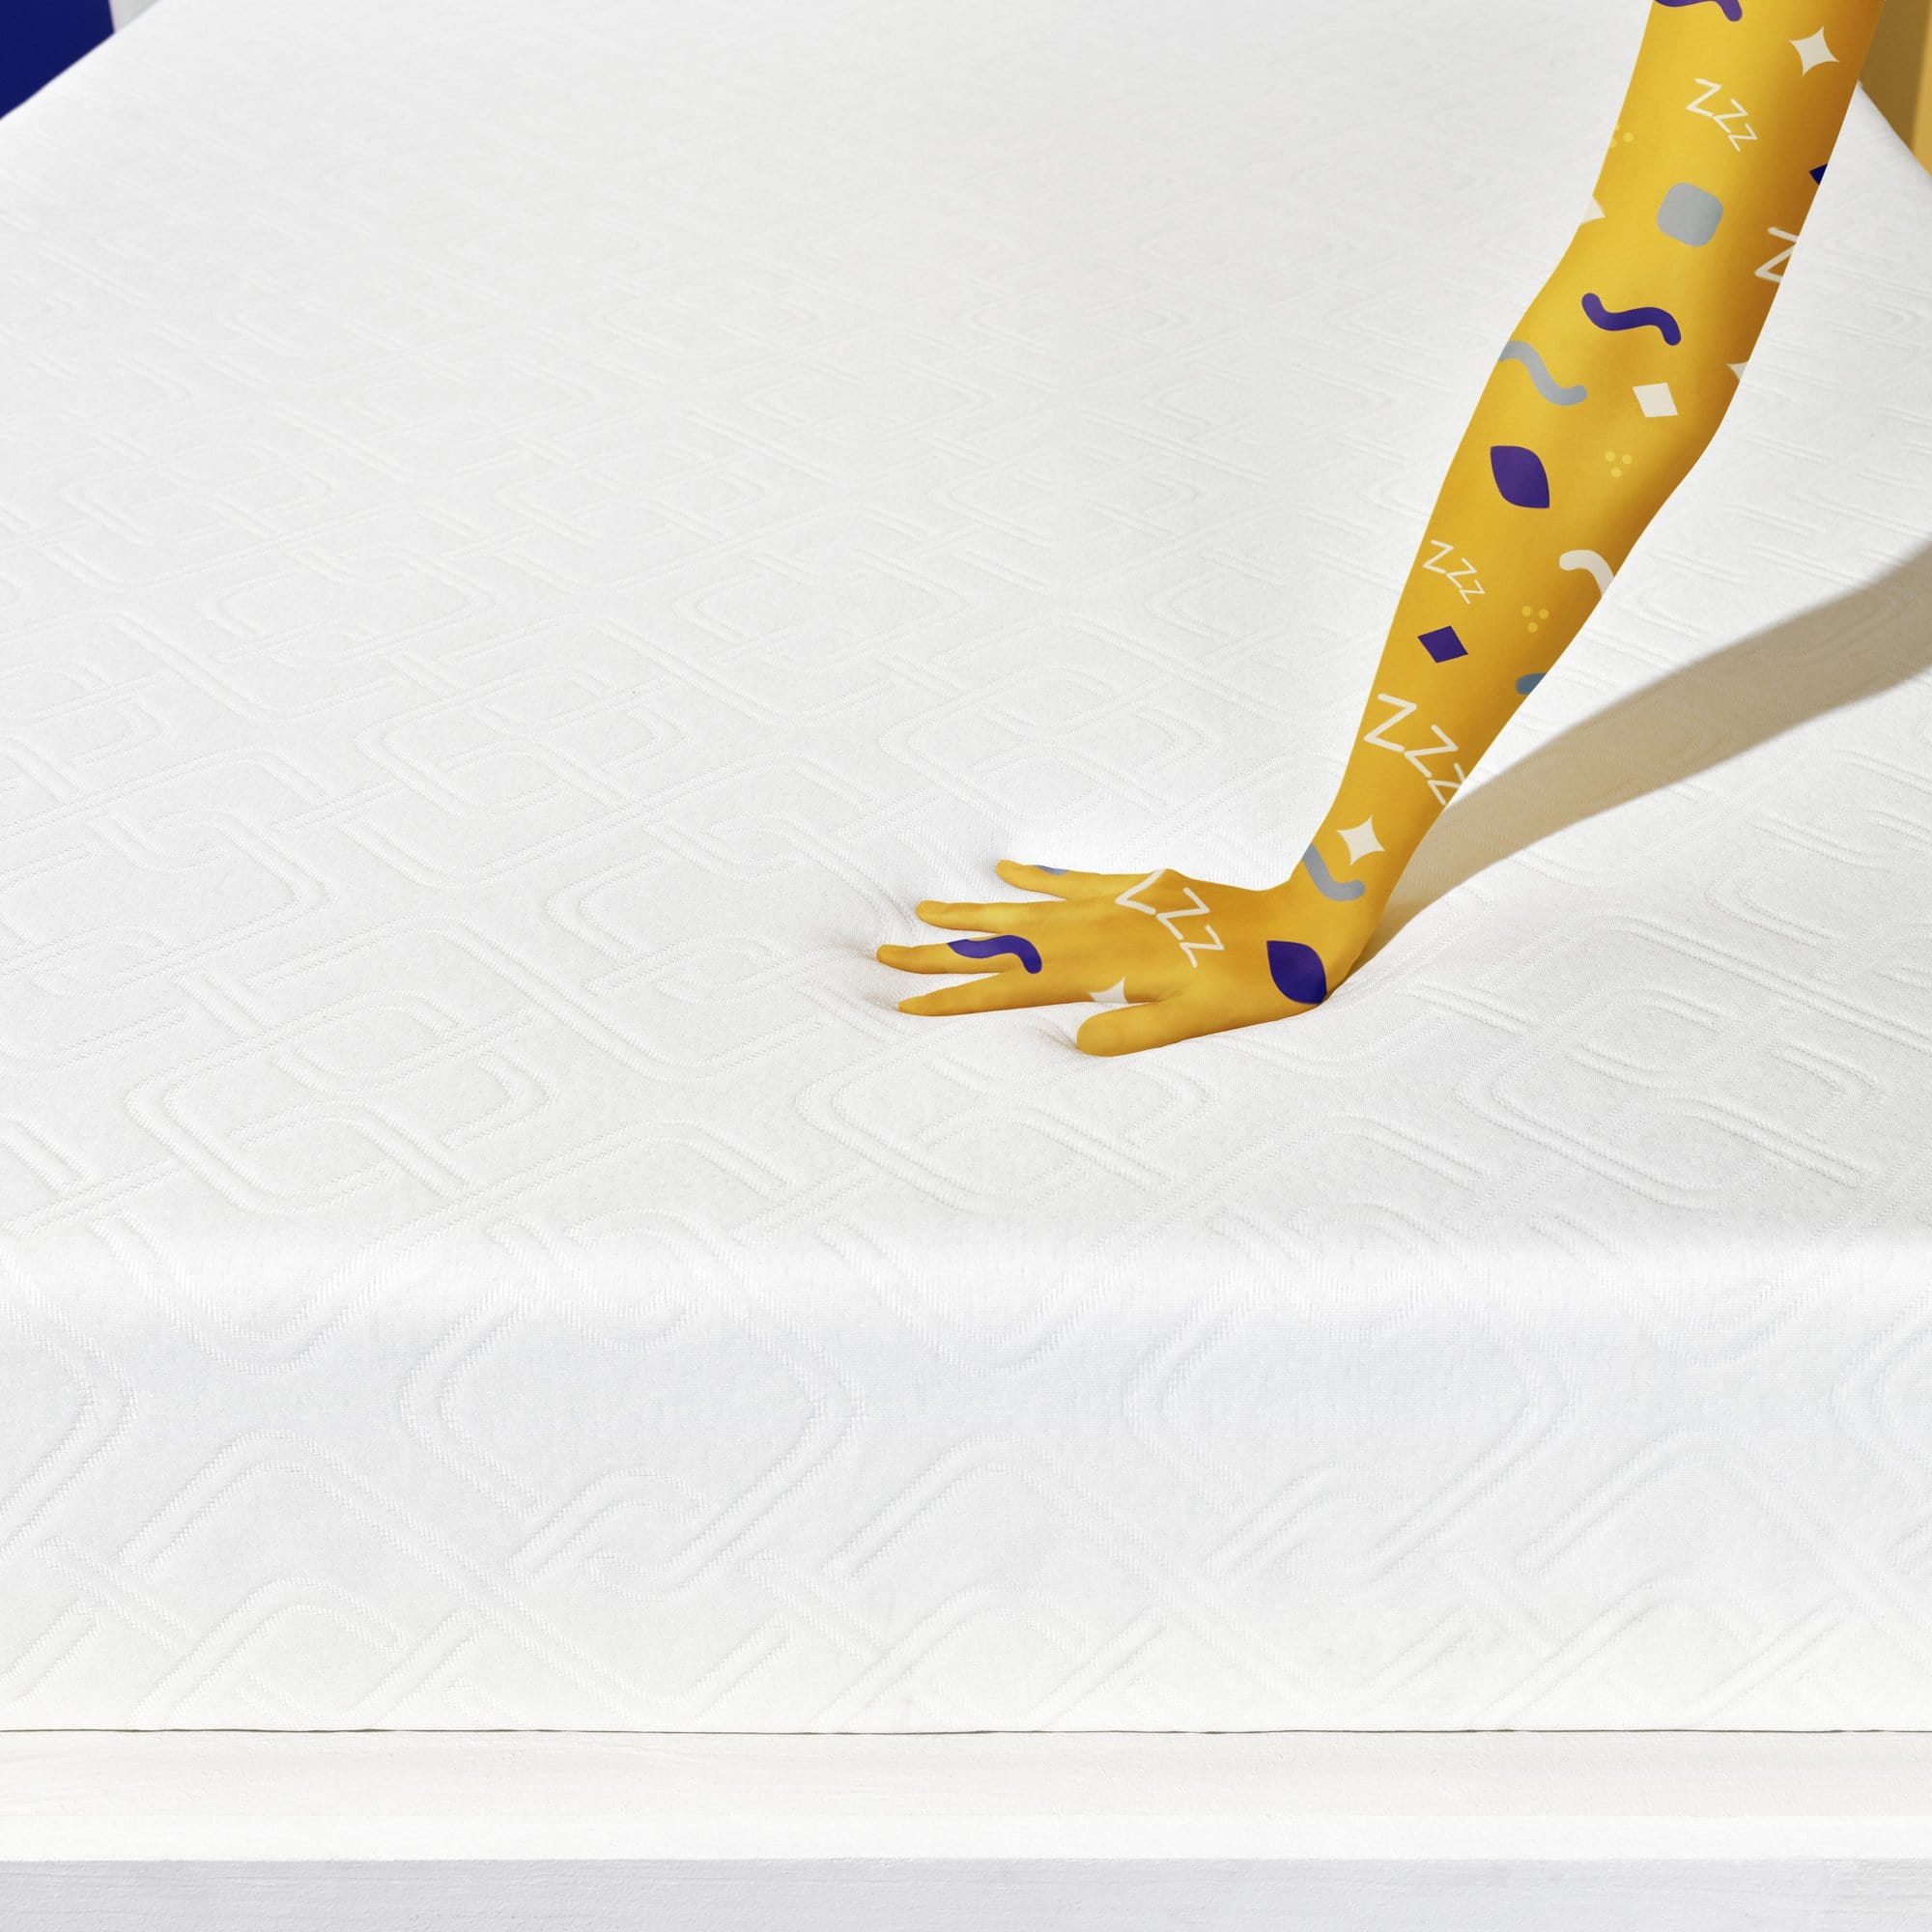 Foam - hand pressing on mattress